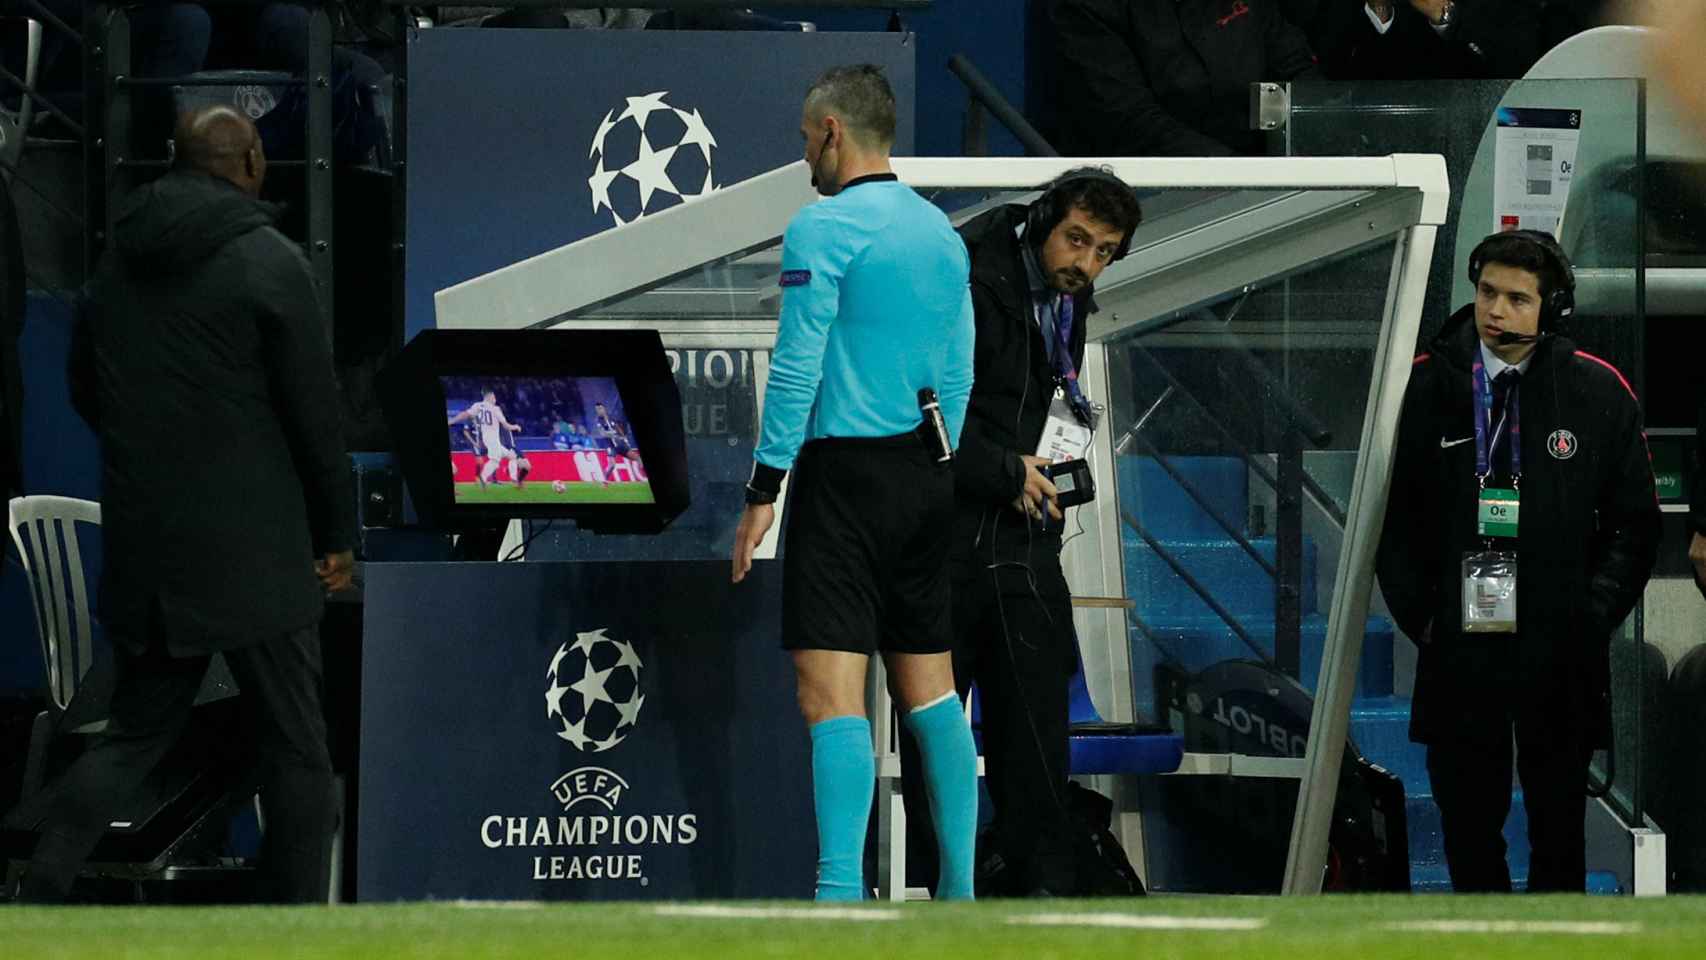 Skomina revisando la jugada tras el aviso del VAR en el PSG - Manchester United de Champions